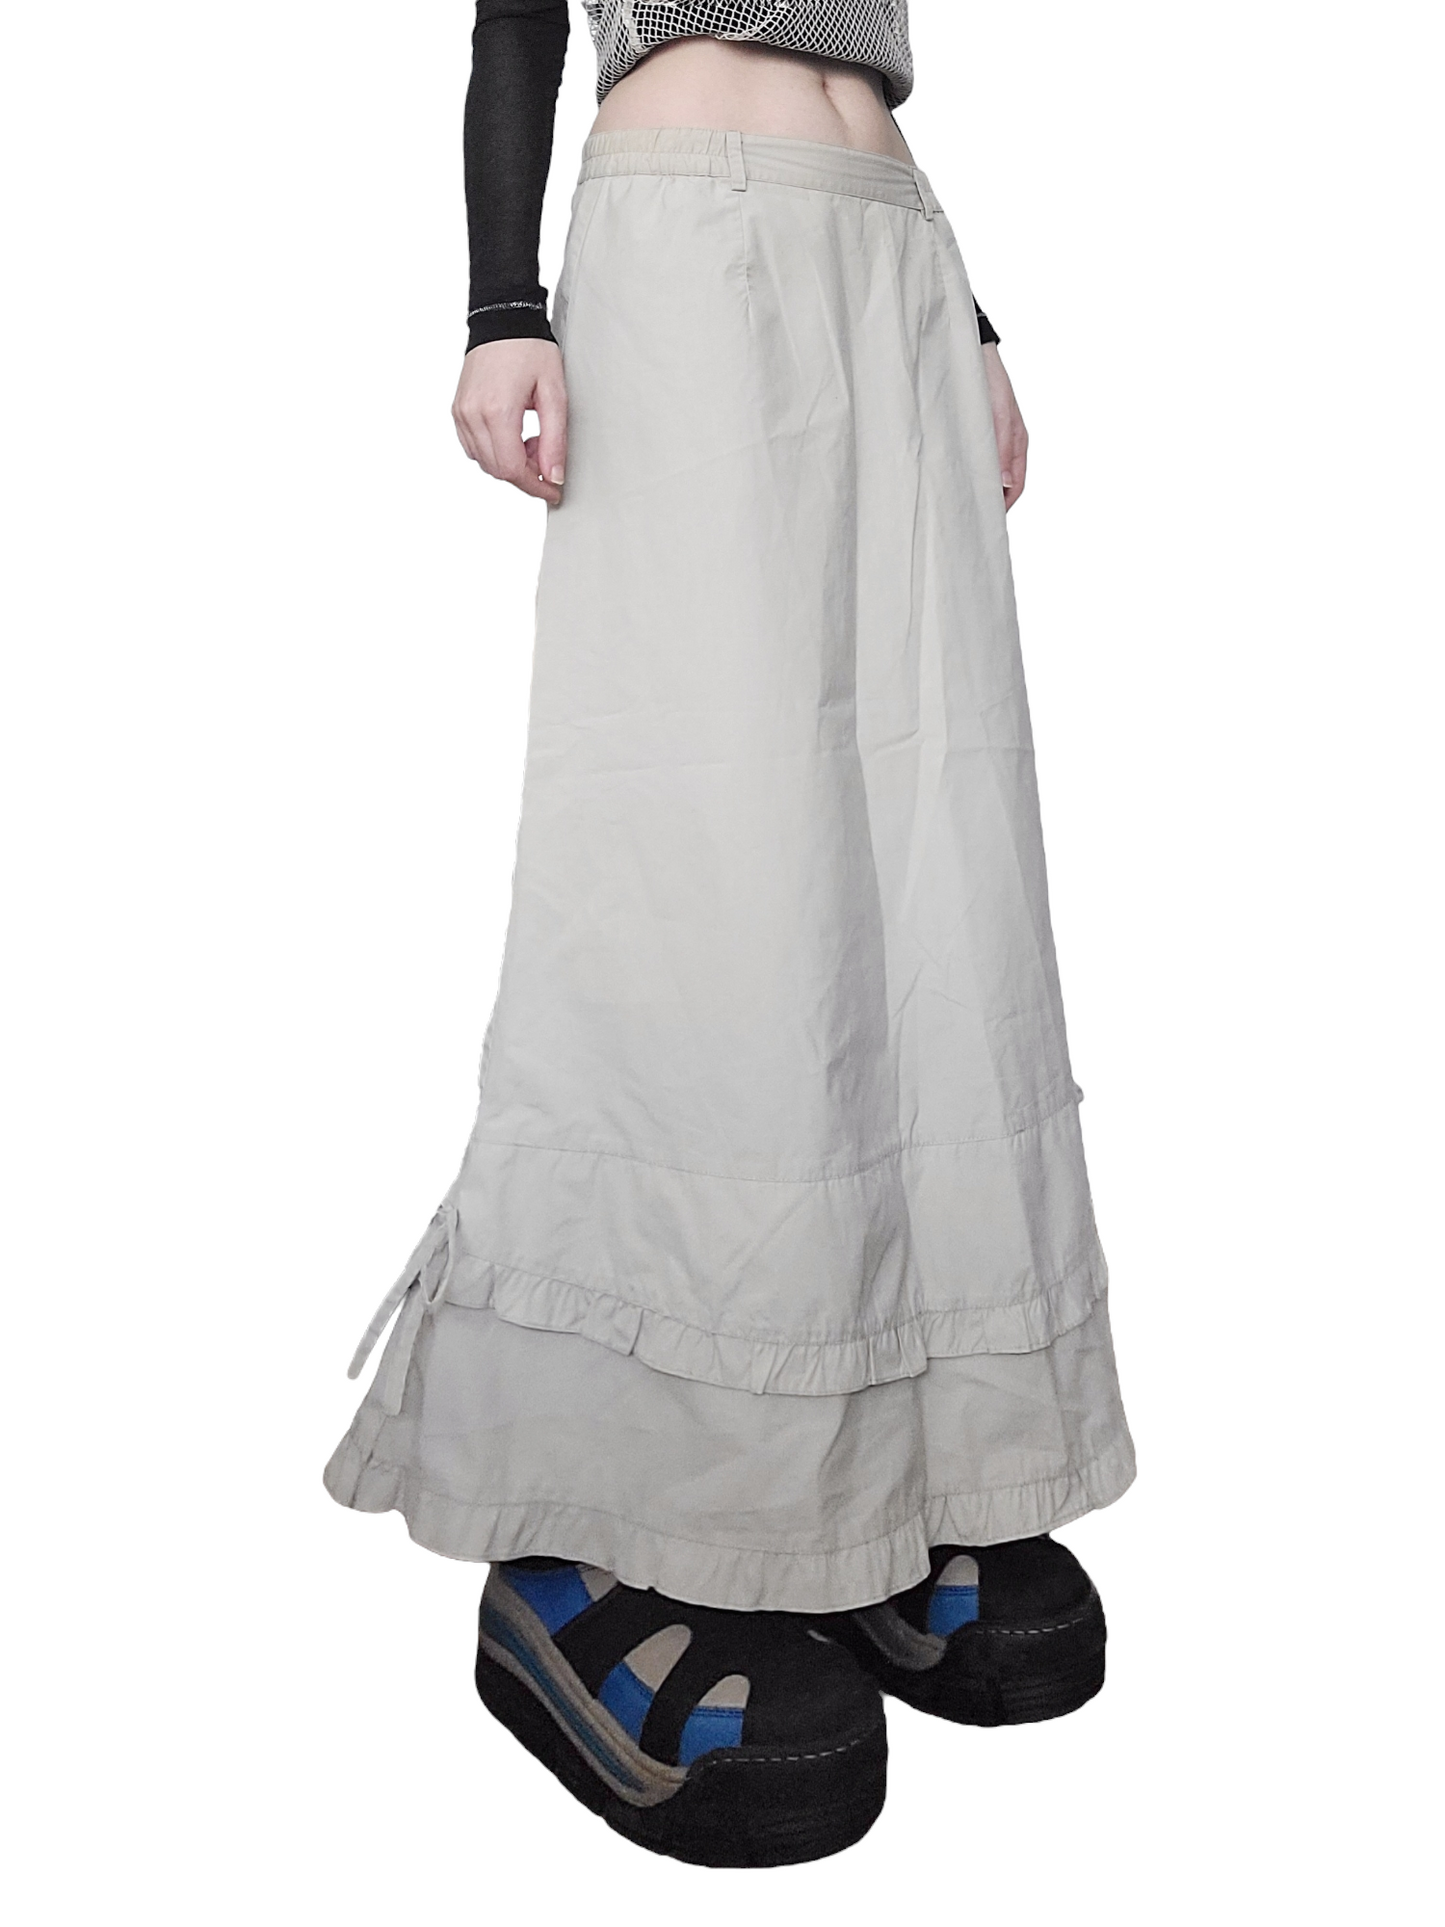 Maxi skirt harajuku gorpcore vintage creme subversive style techwear